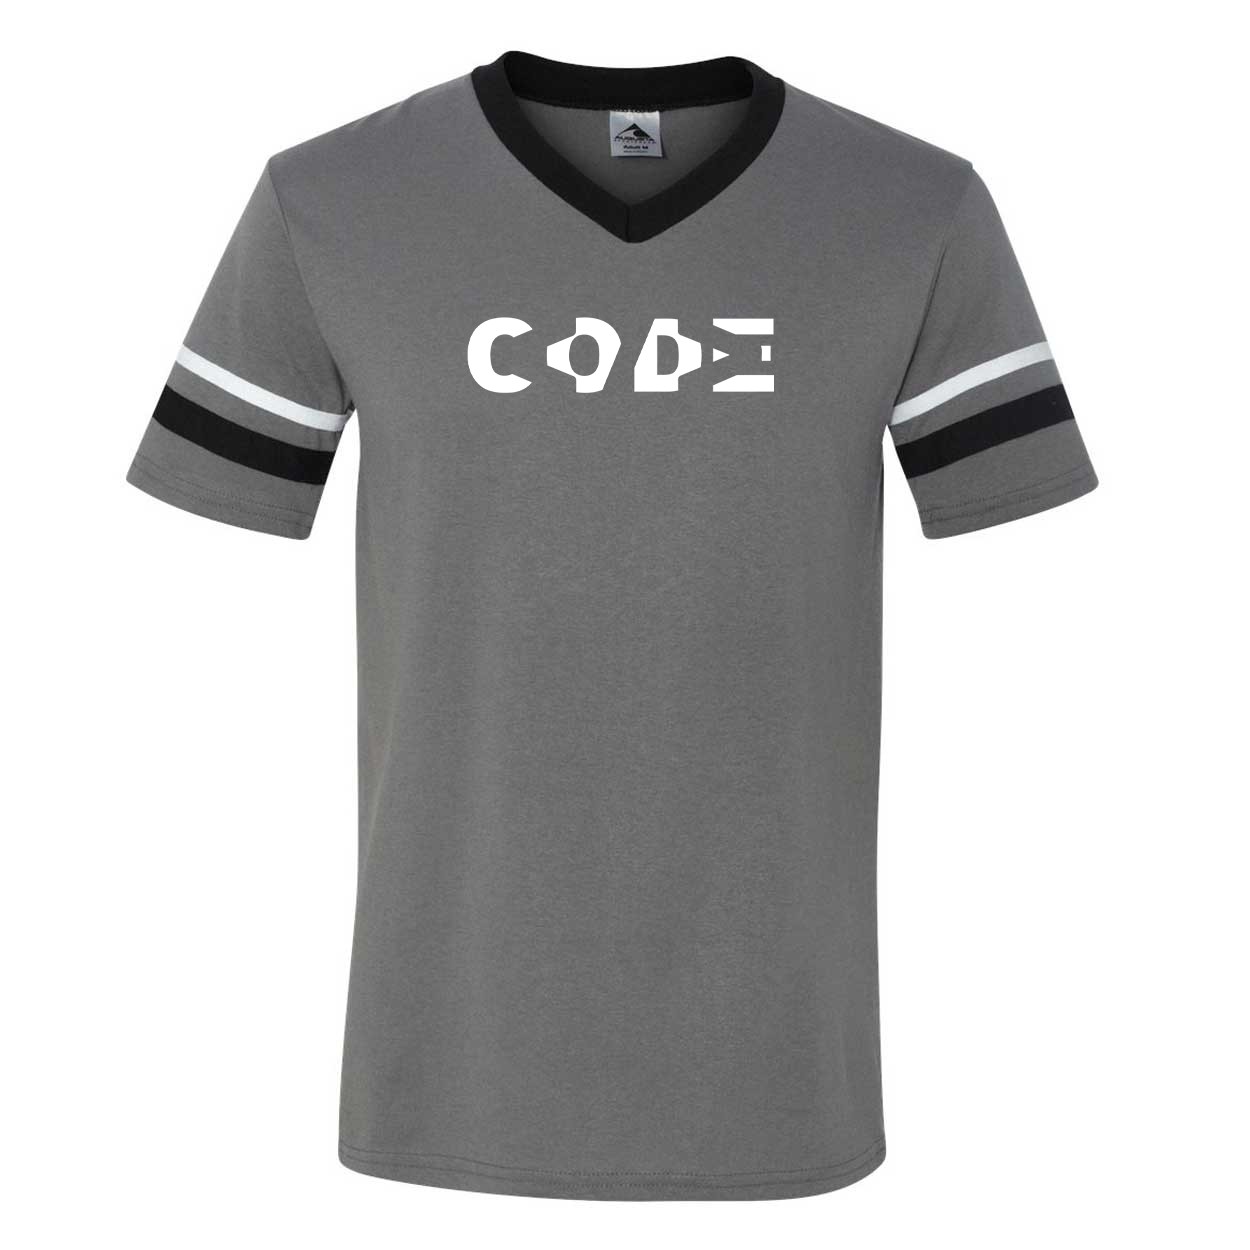 Code Tag Logo Classic Premium Striped Jersey T-Shirt Graphite/Black/White